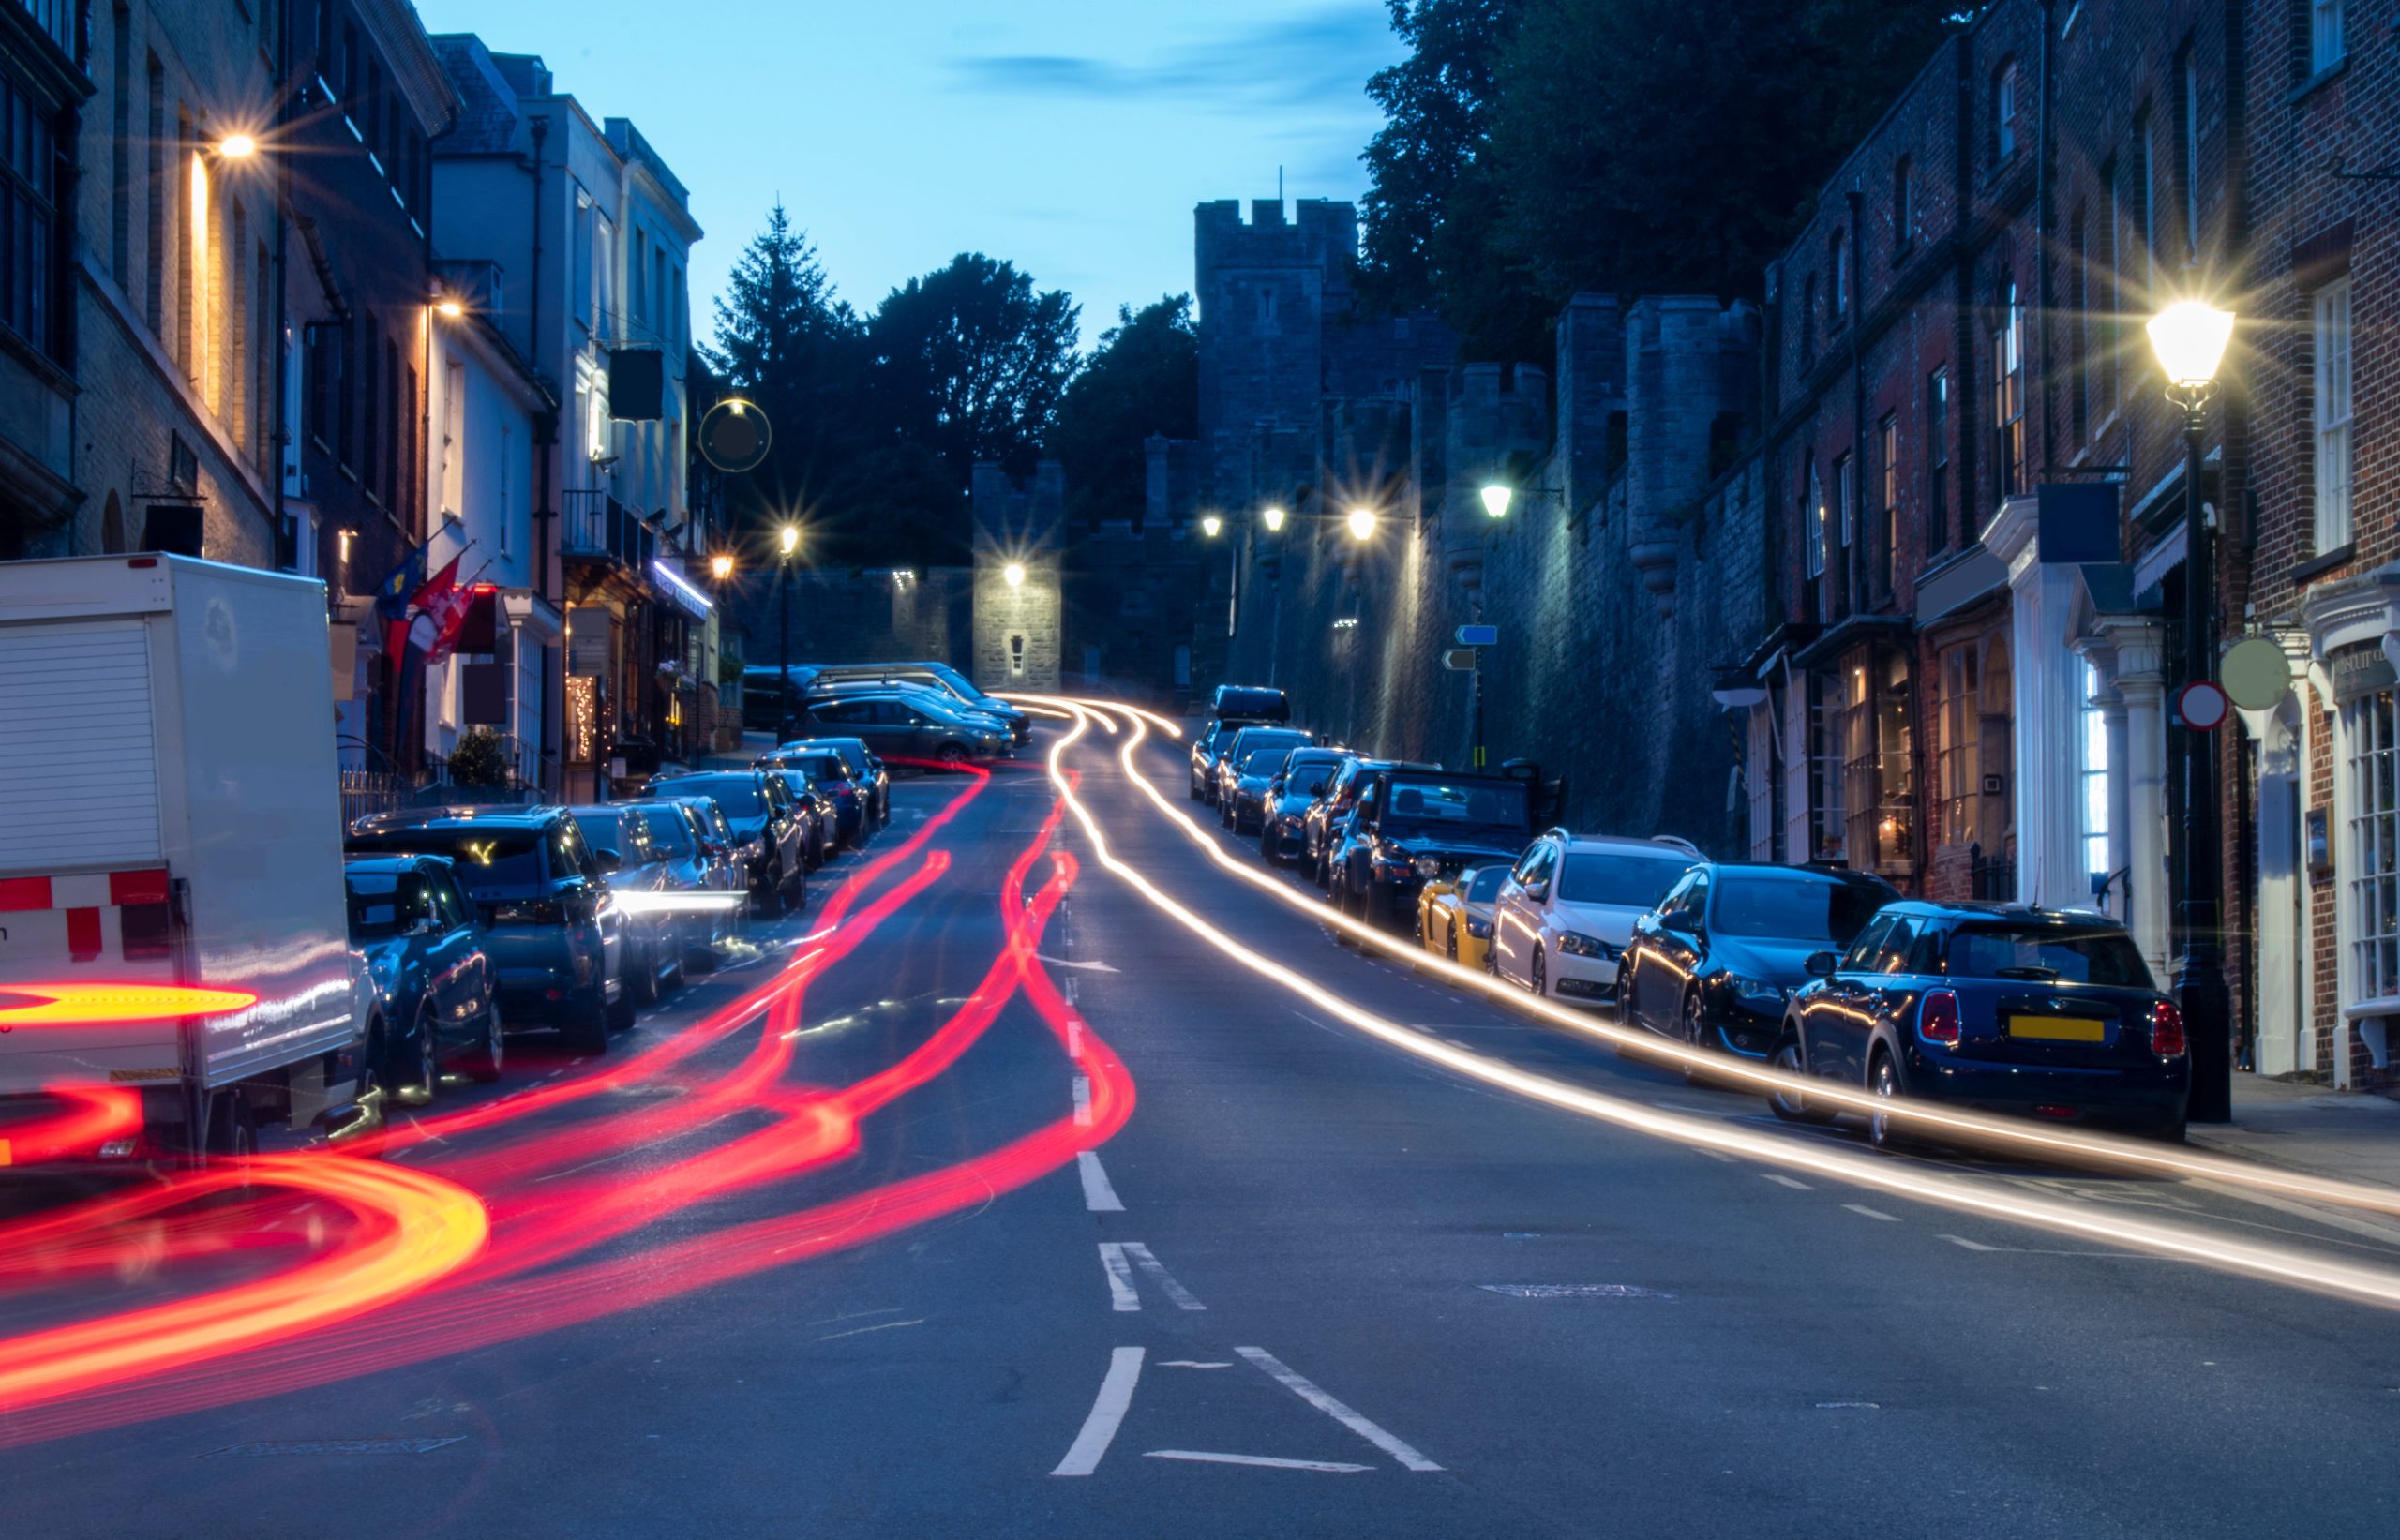 Arundel High Street, England, night photo with car light trails. By Geoffrey (Adobe Stock)